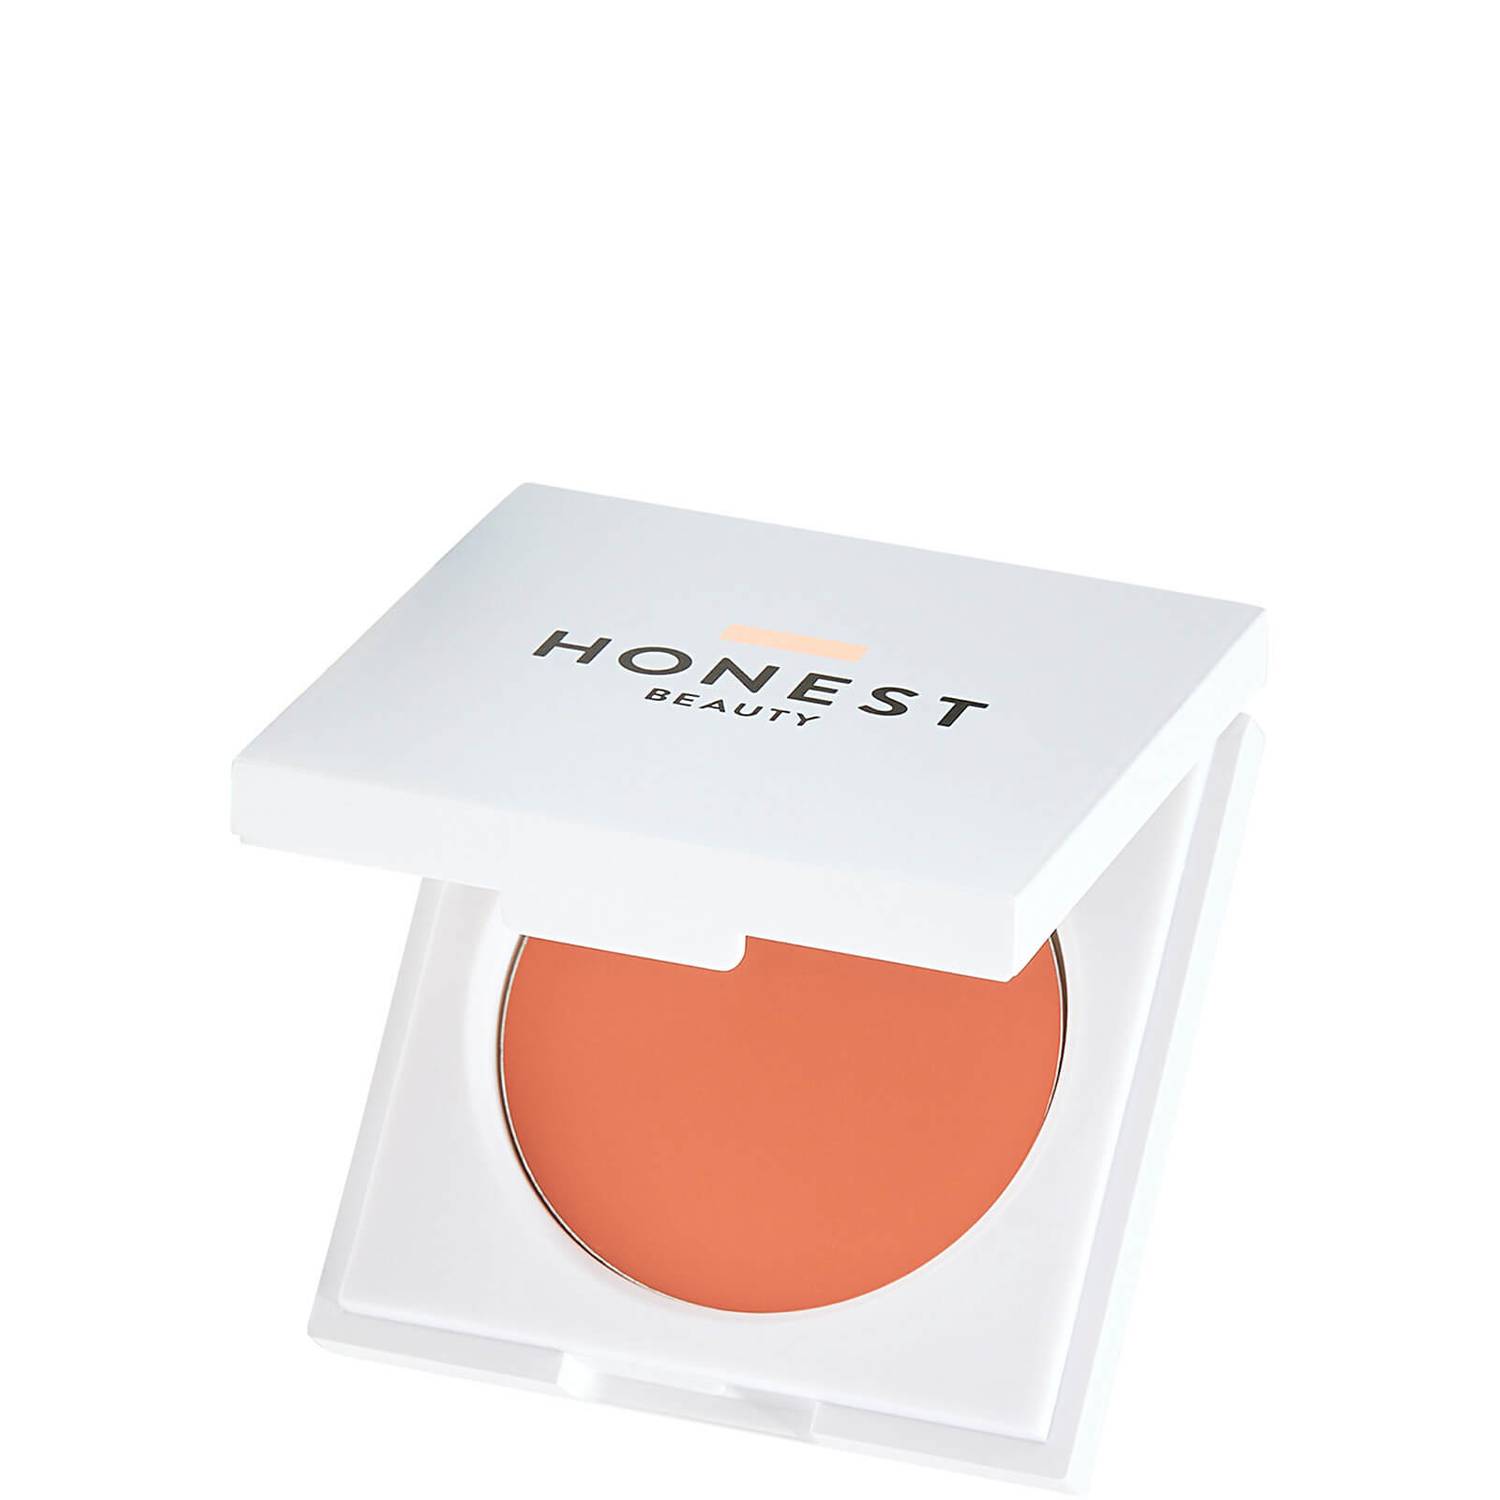 Honest Beauty Creme Cheek Blush ( 3g ) £16.00 at Cult Beauty